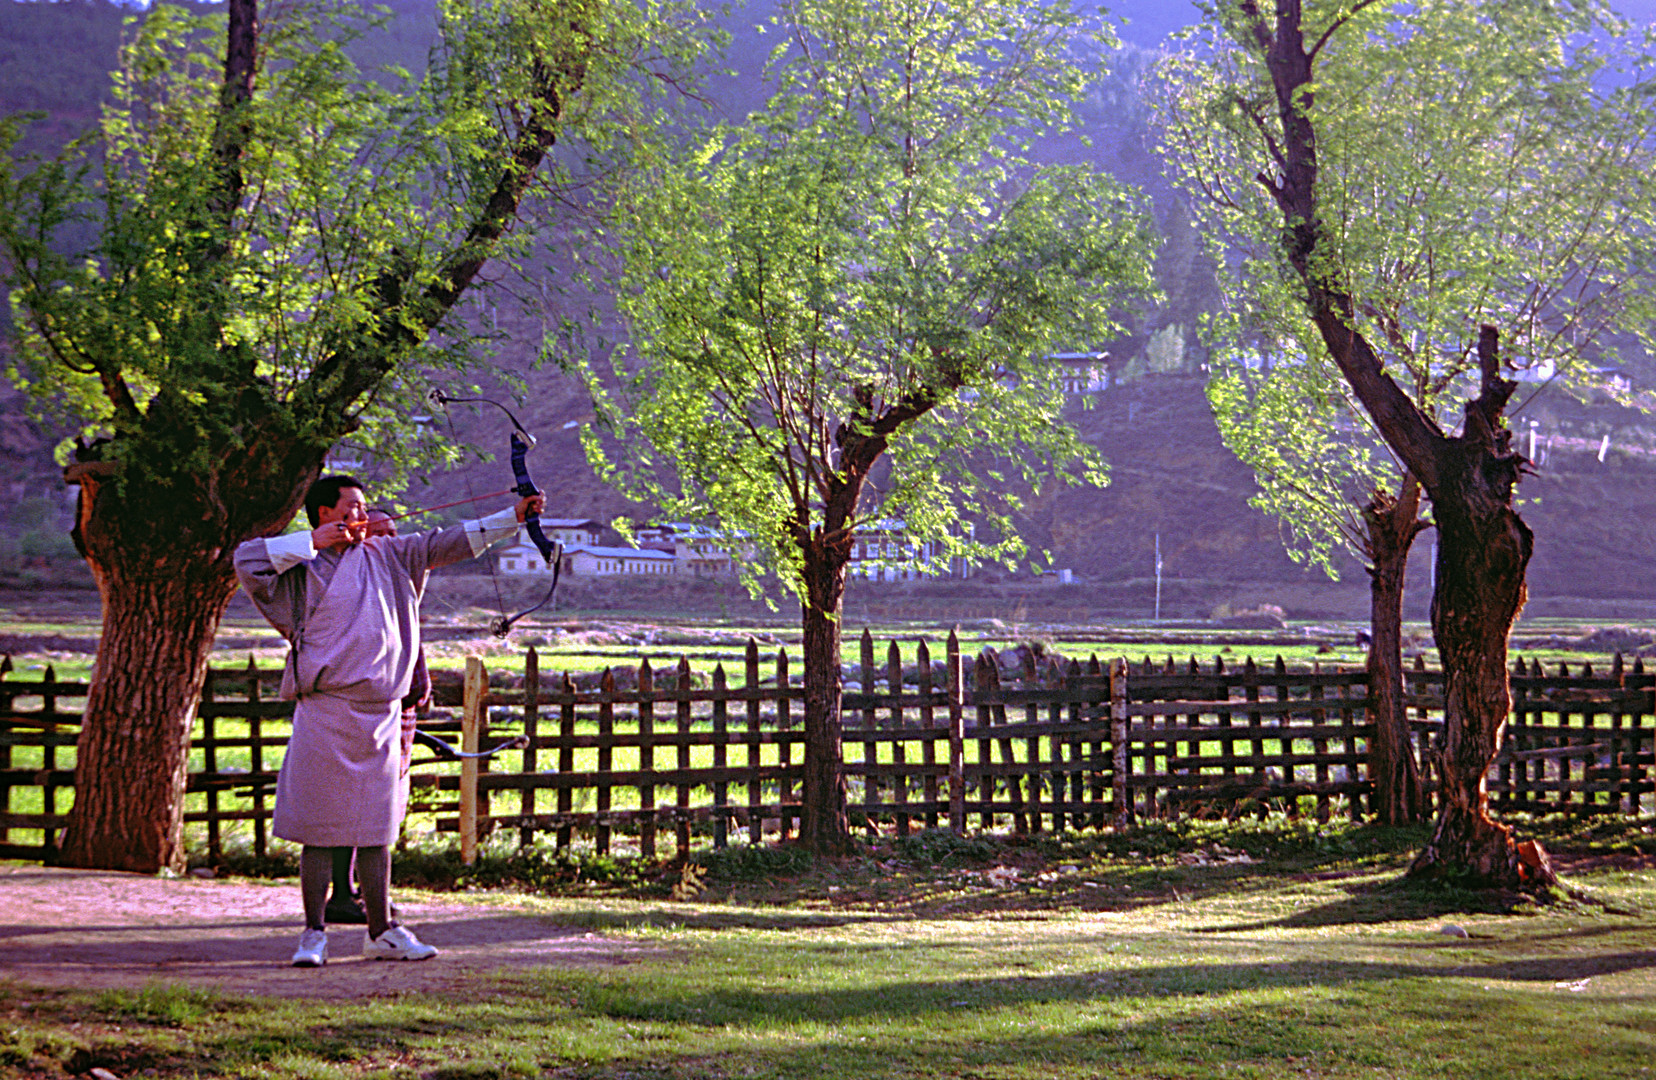 A Bhutanese man playing archery